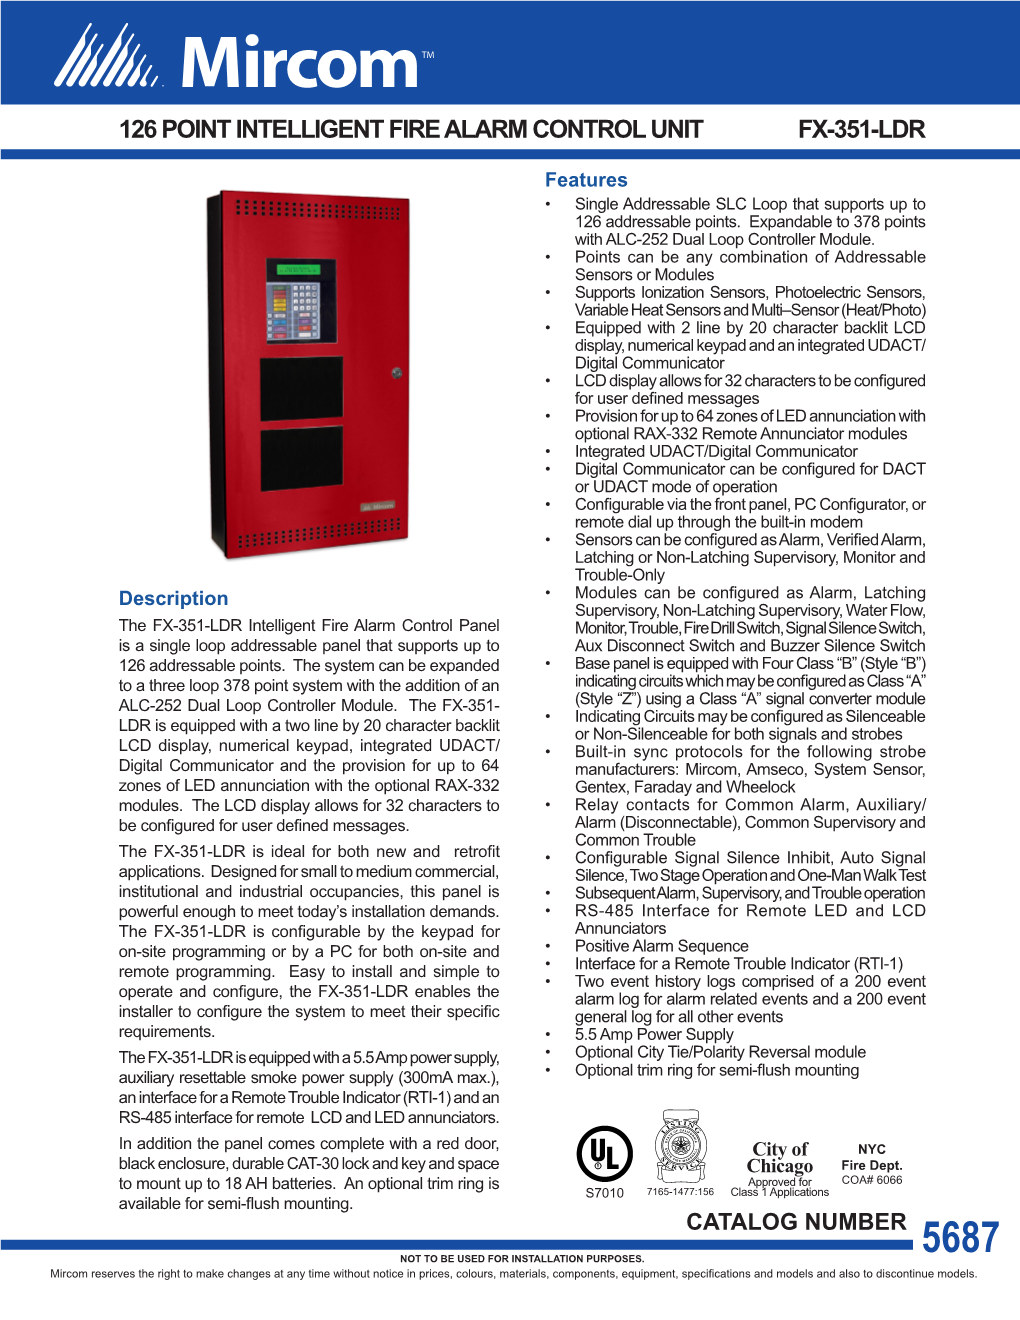 CAT-5687 FX-351-LDR 126 Point Intelligent Fire Alarm Control Panels